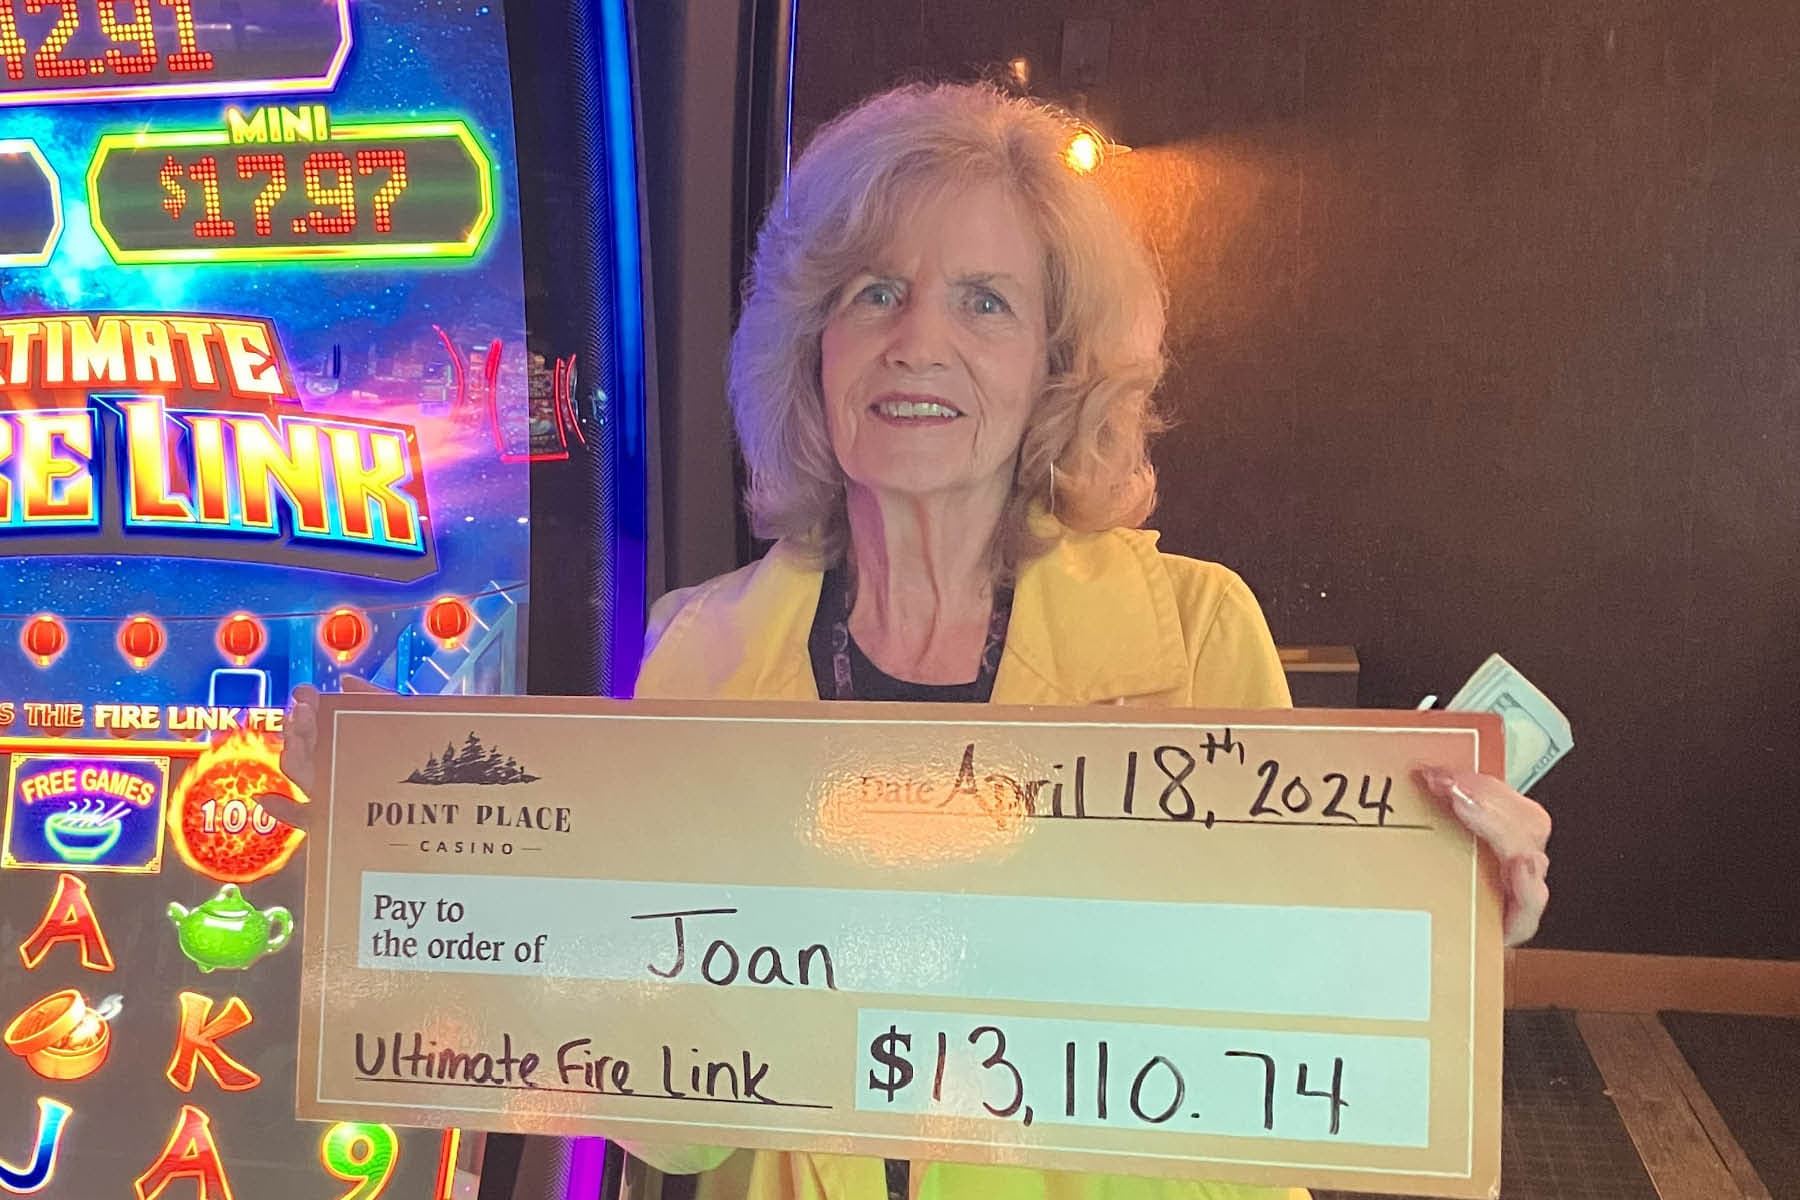 Joan won $13,110